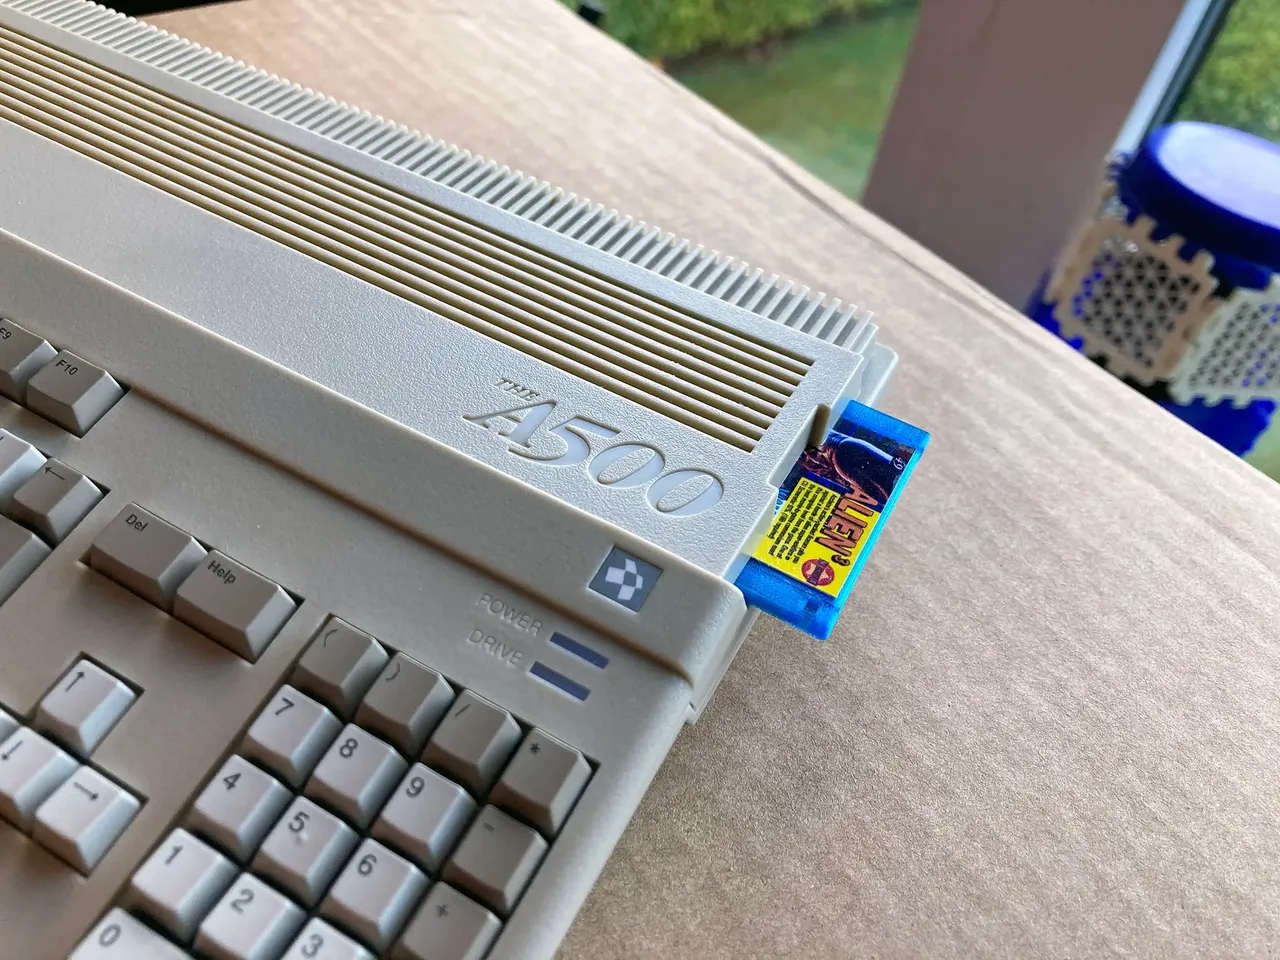 Amiga 500 Mini (A500 Mini) - Miniature Full Size Floppy Disk by